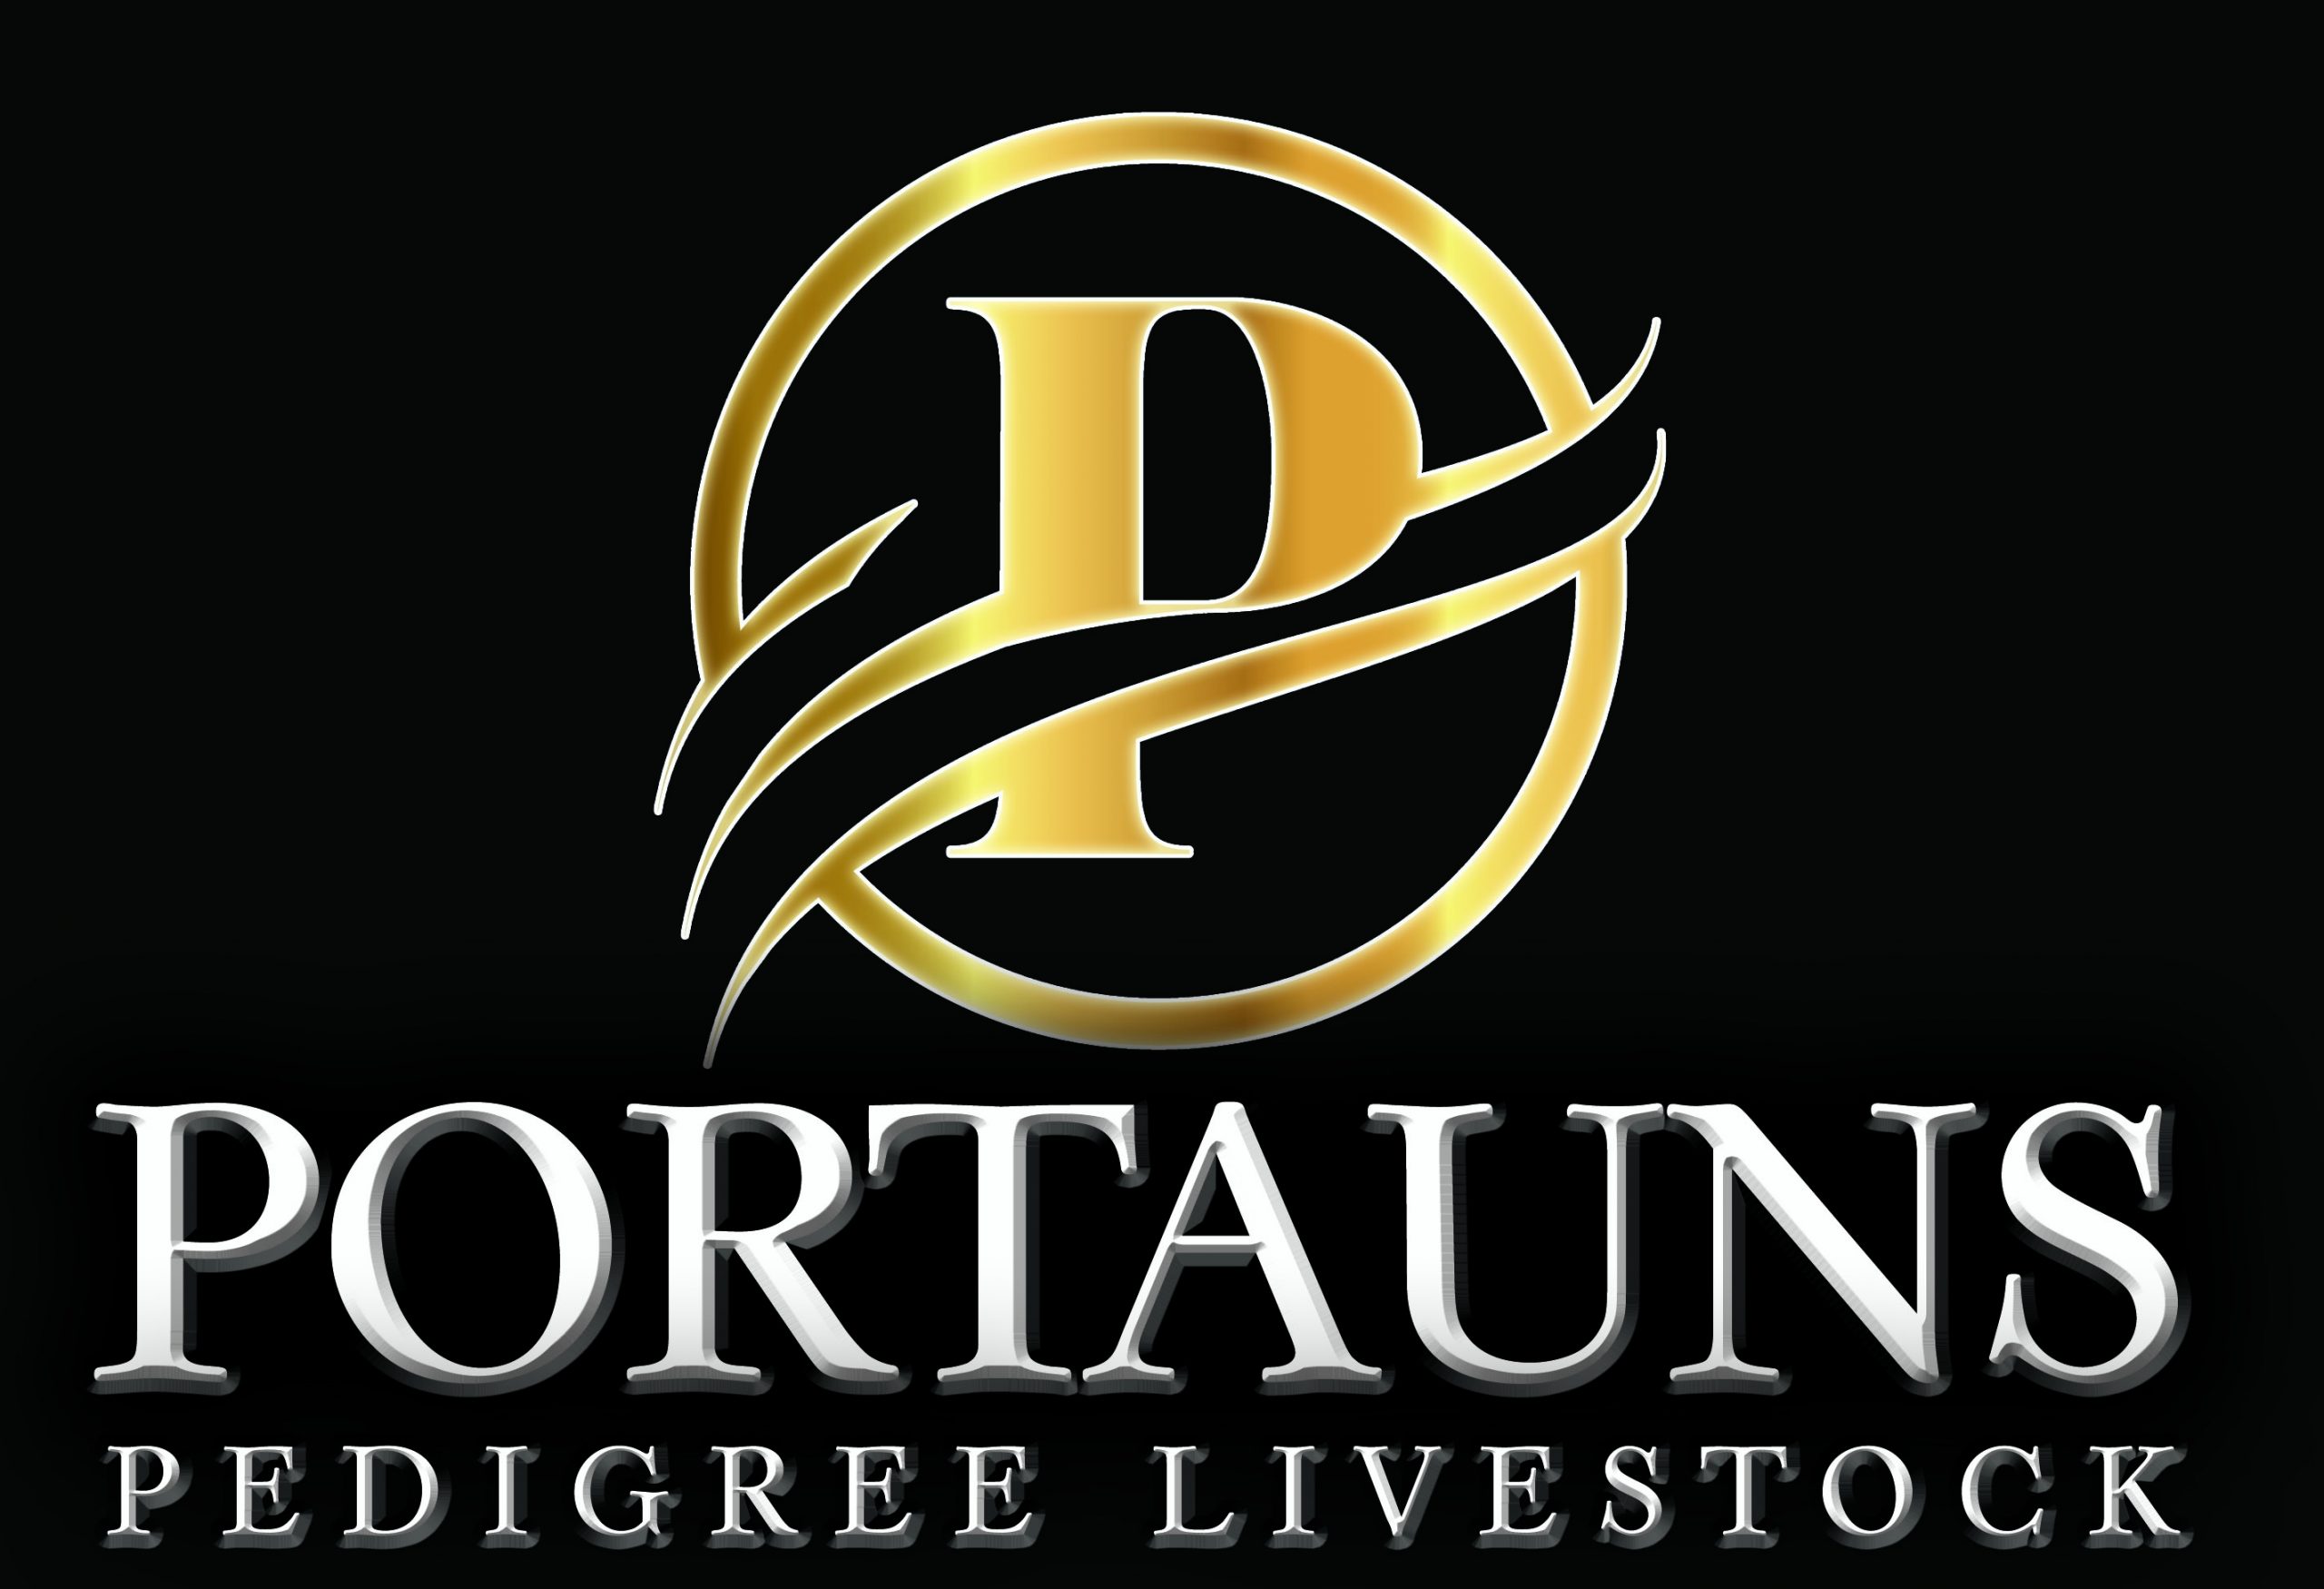 products-portauns_pedigree_livestock_logo